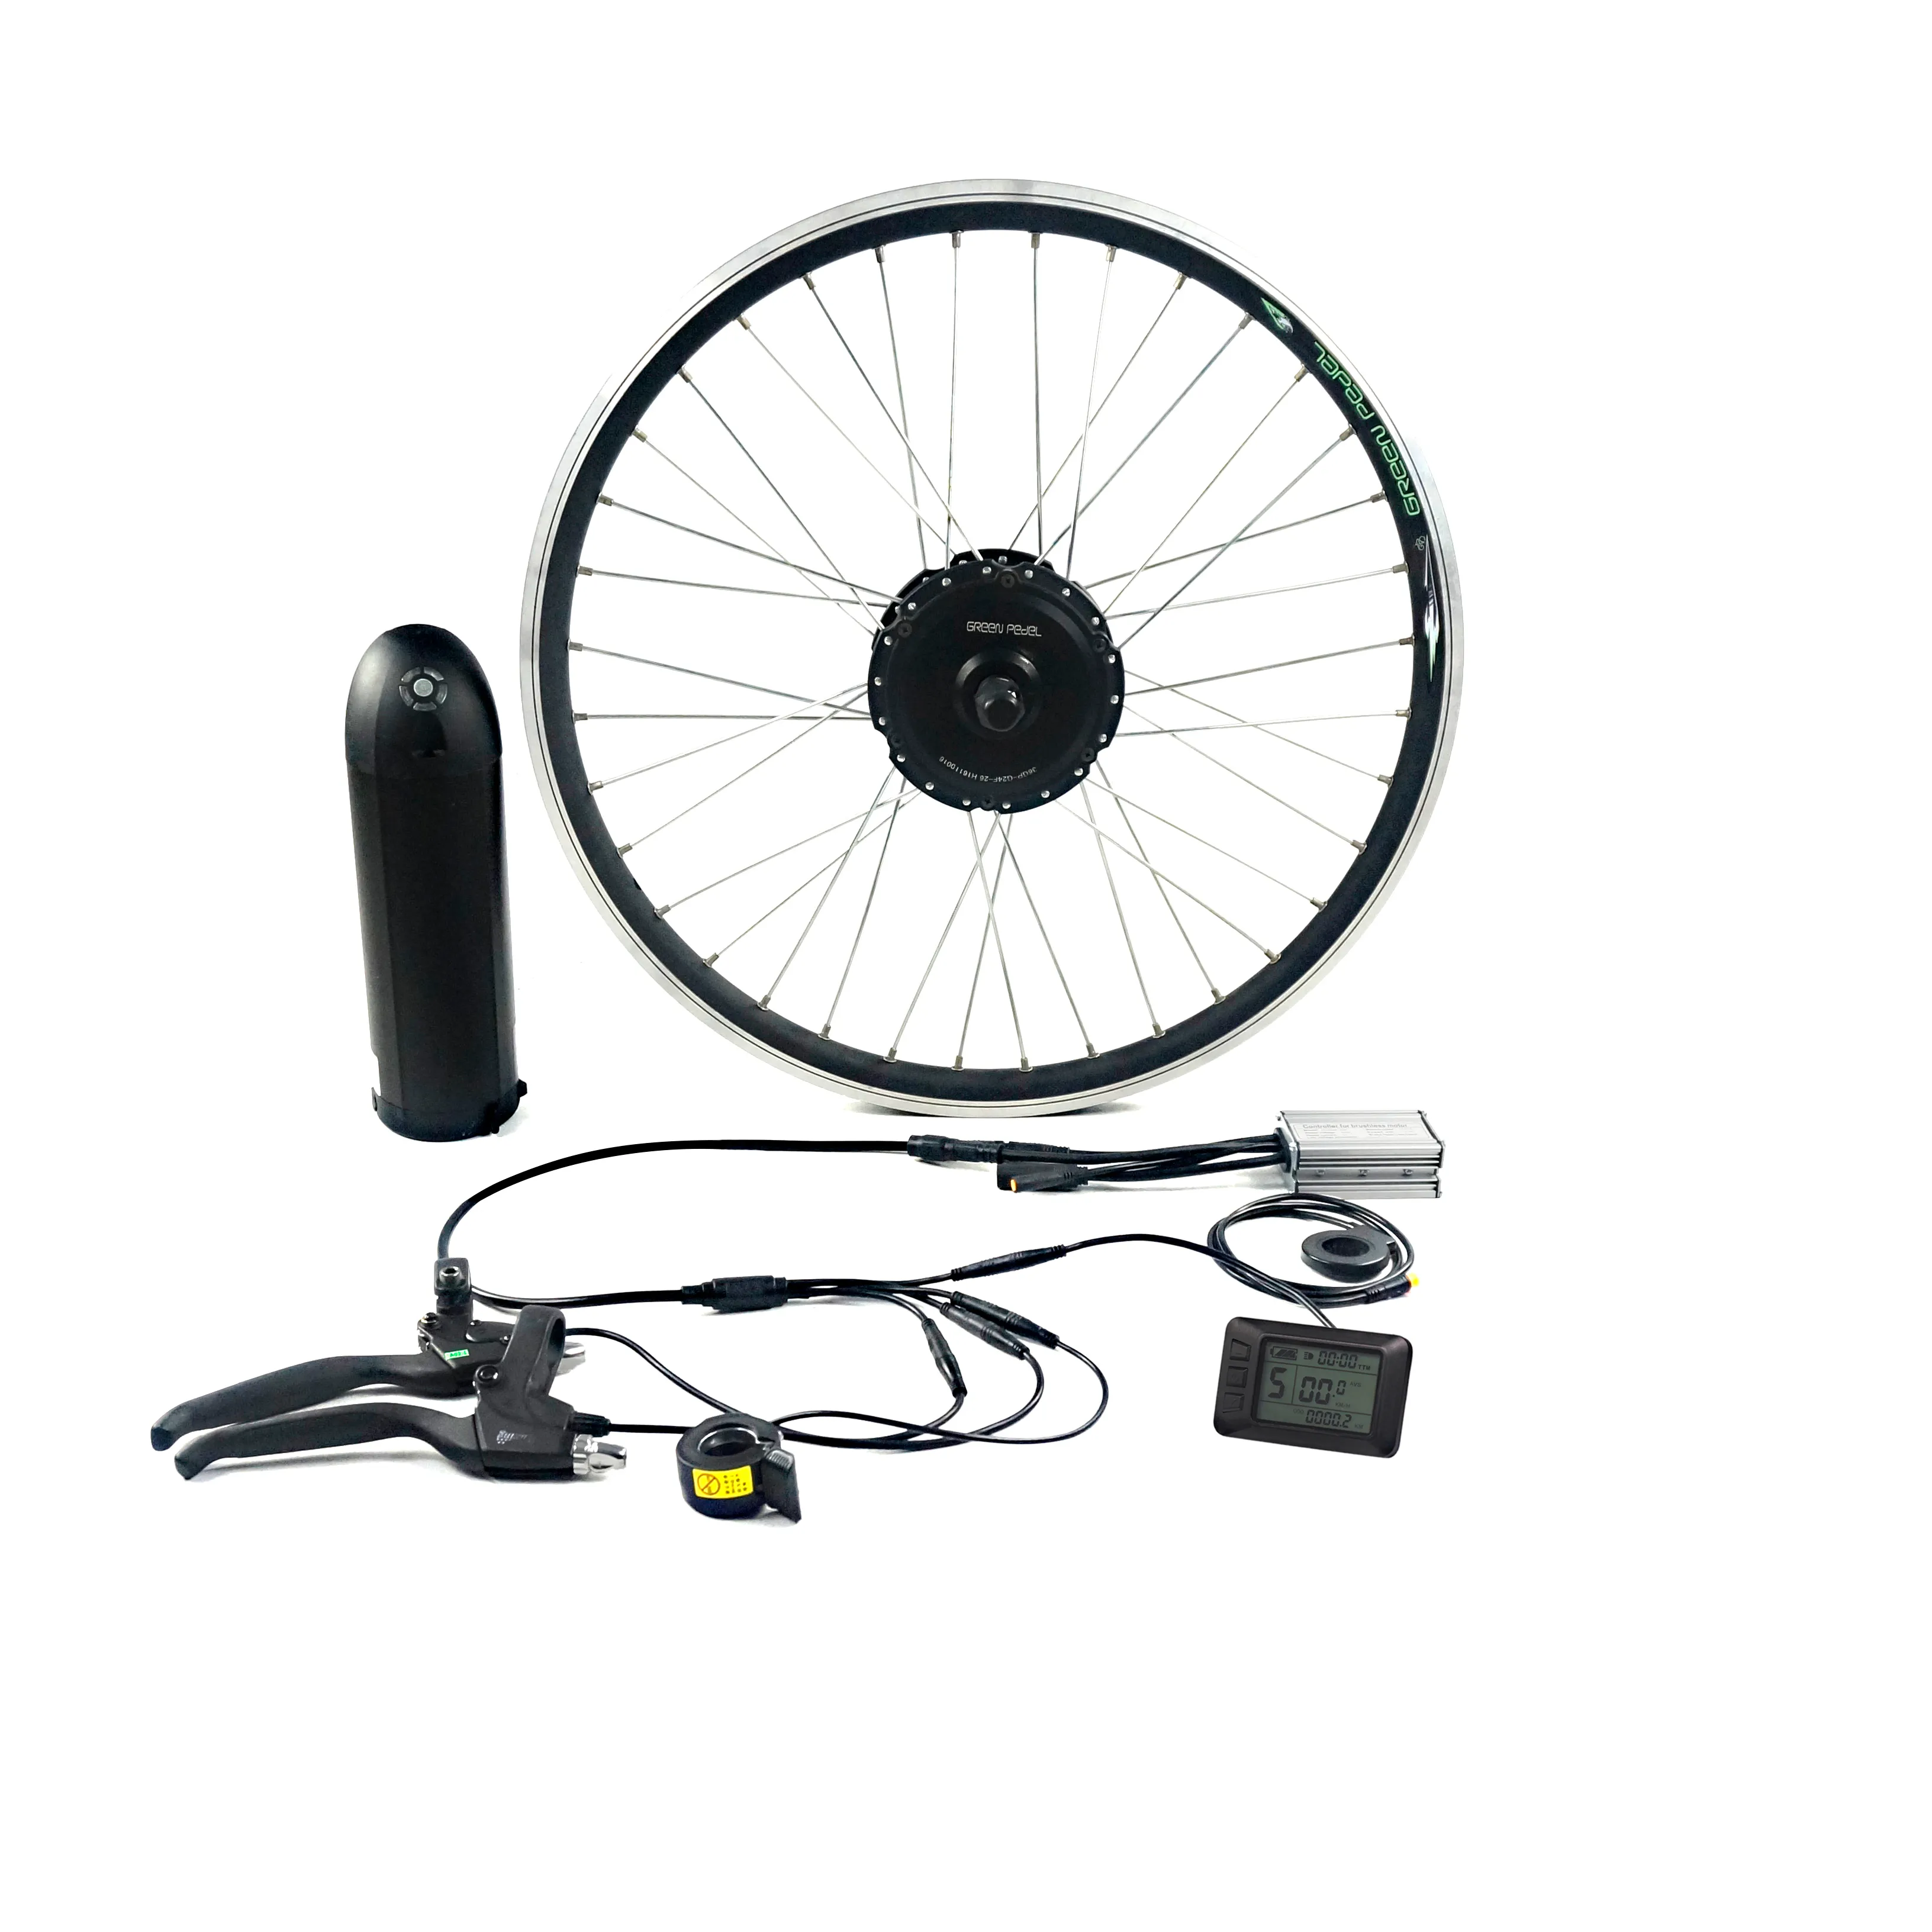 Greenpedel 250Watt kaset motorlu bisiklet kiti pil elektrikli bisiklet 26 inç satış